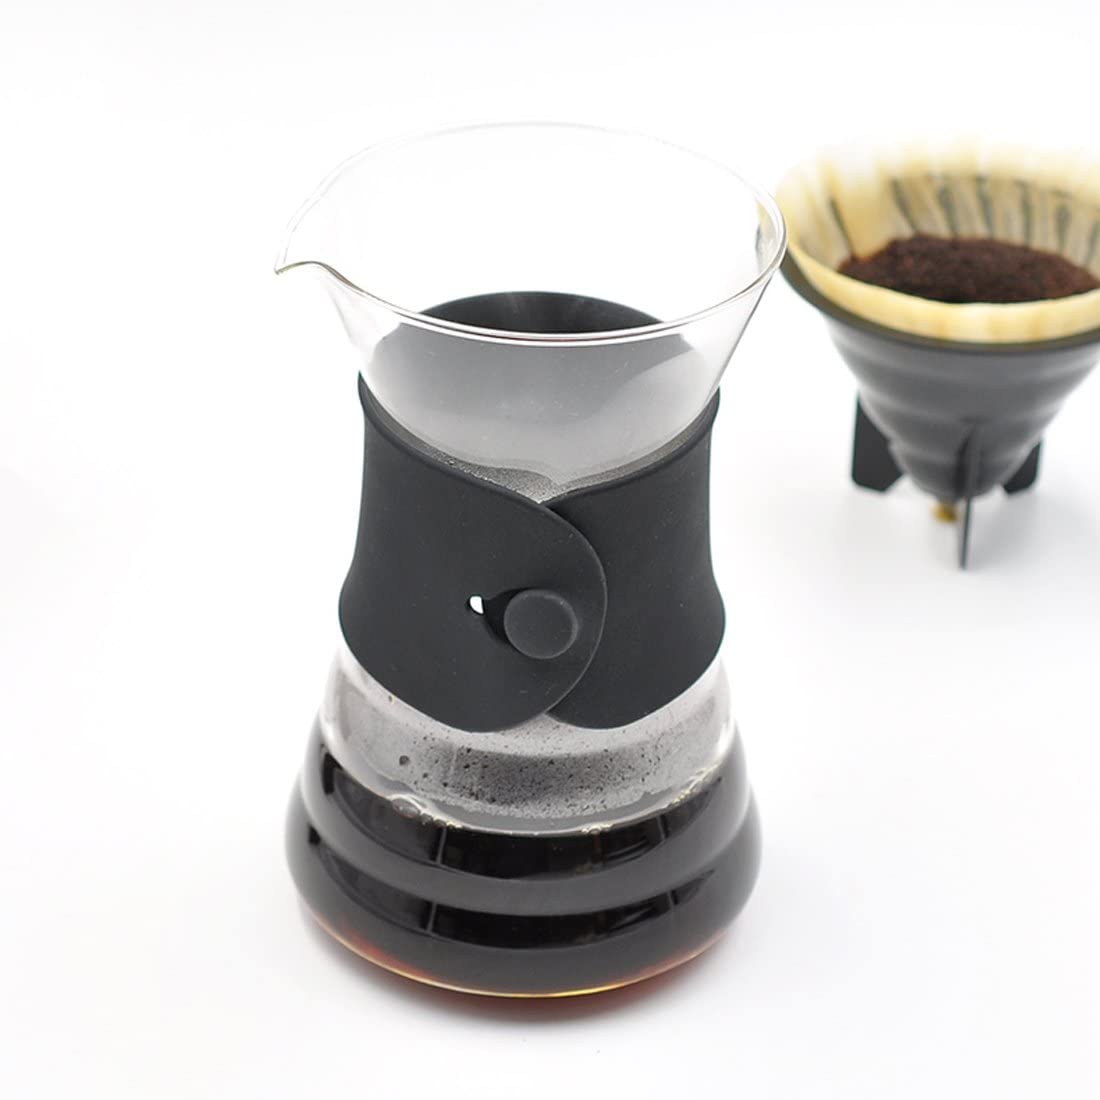  Pour Coffee Maker, Glass Coffee Maker Hand Drip Coffee